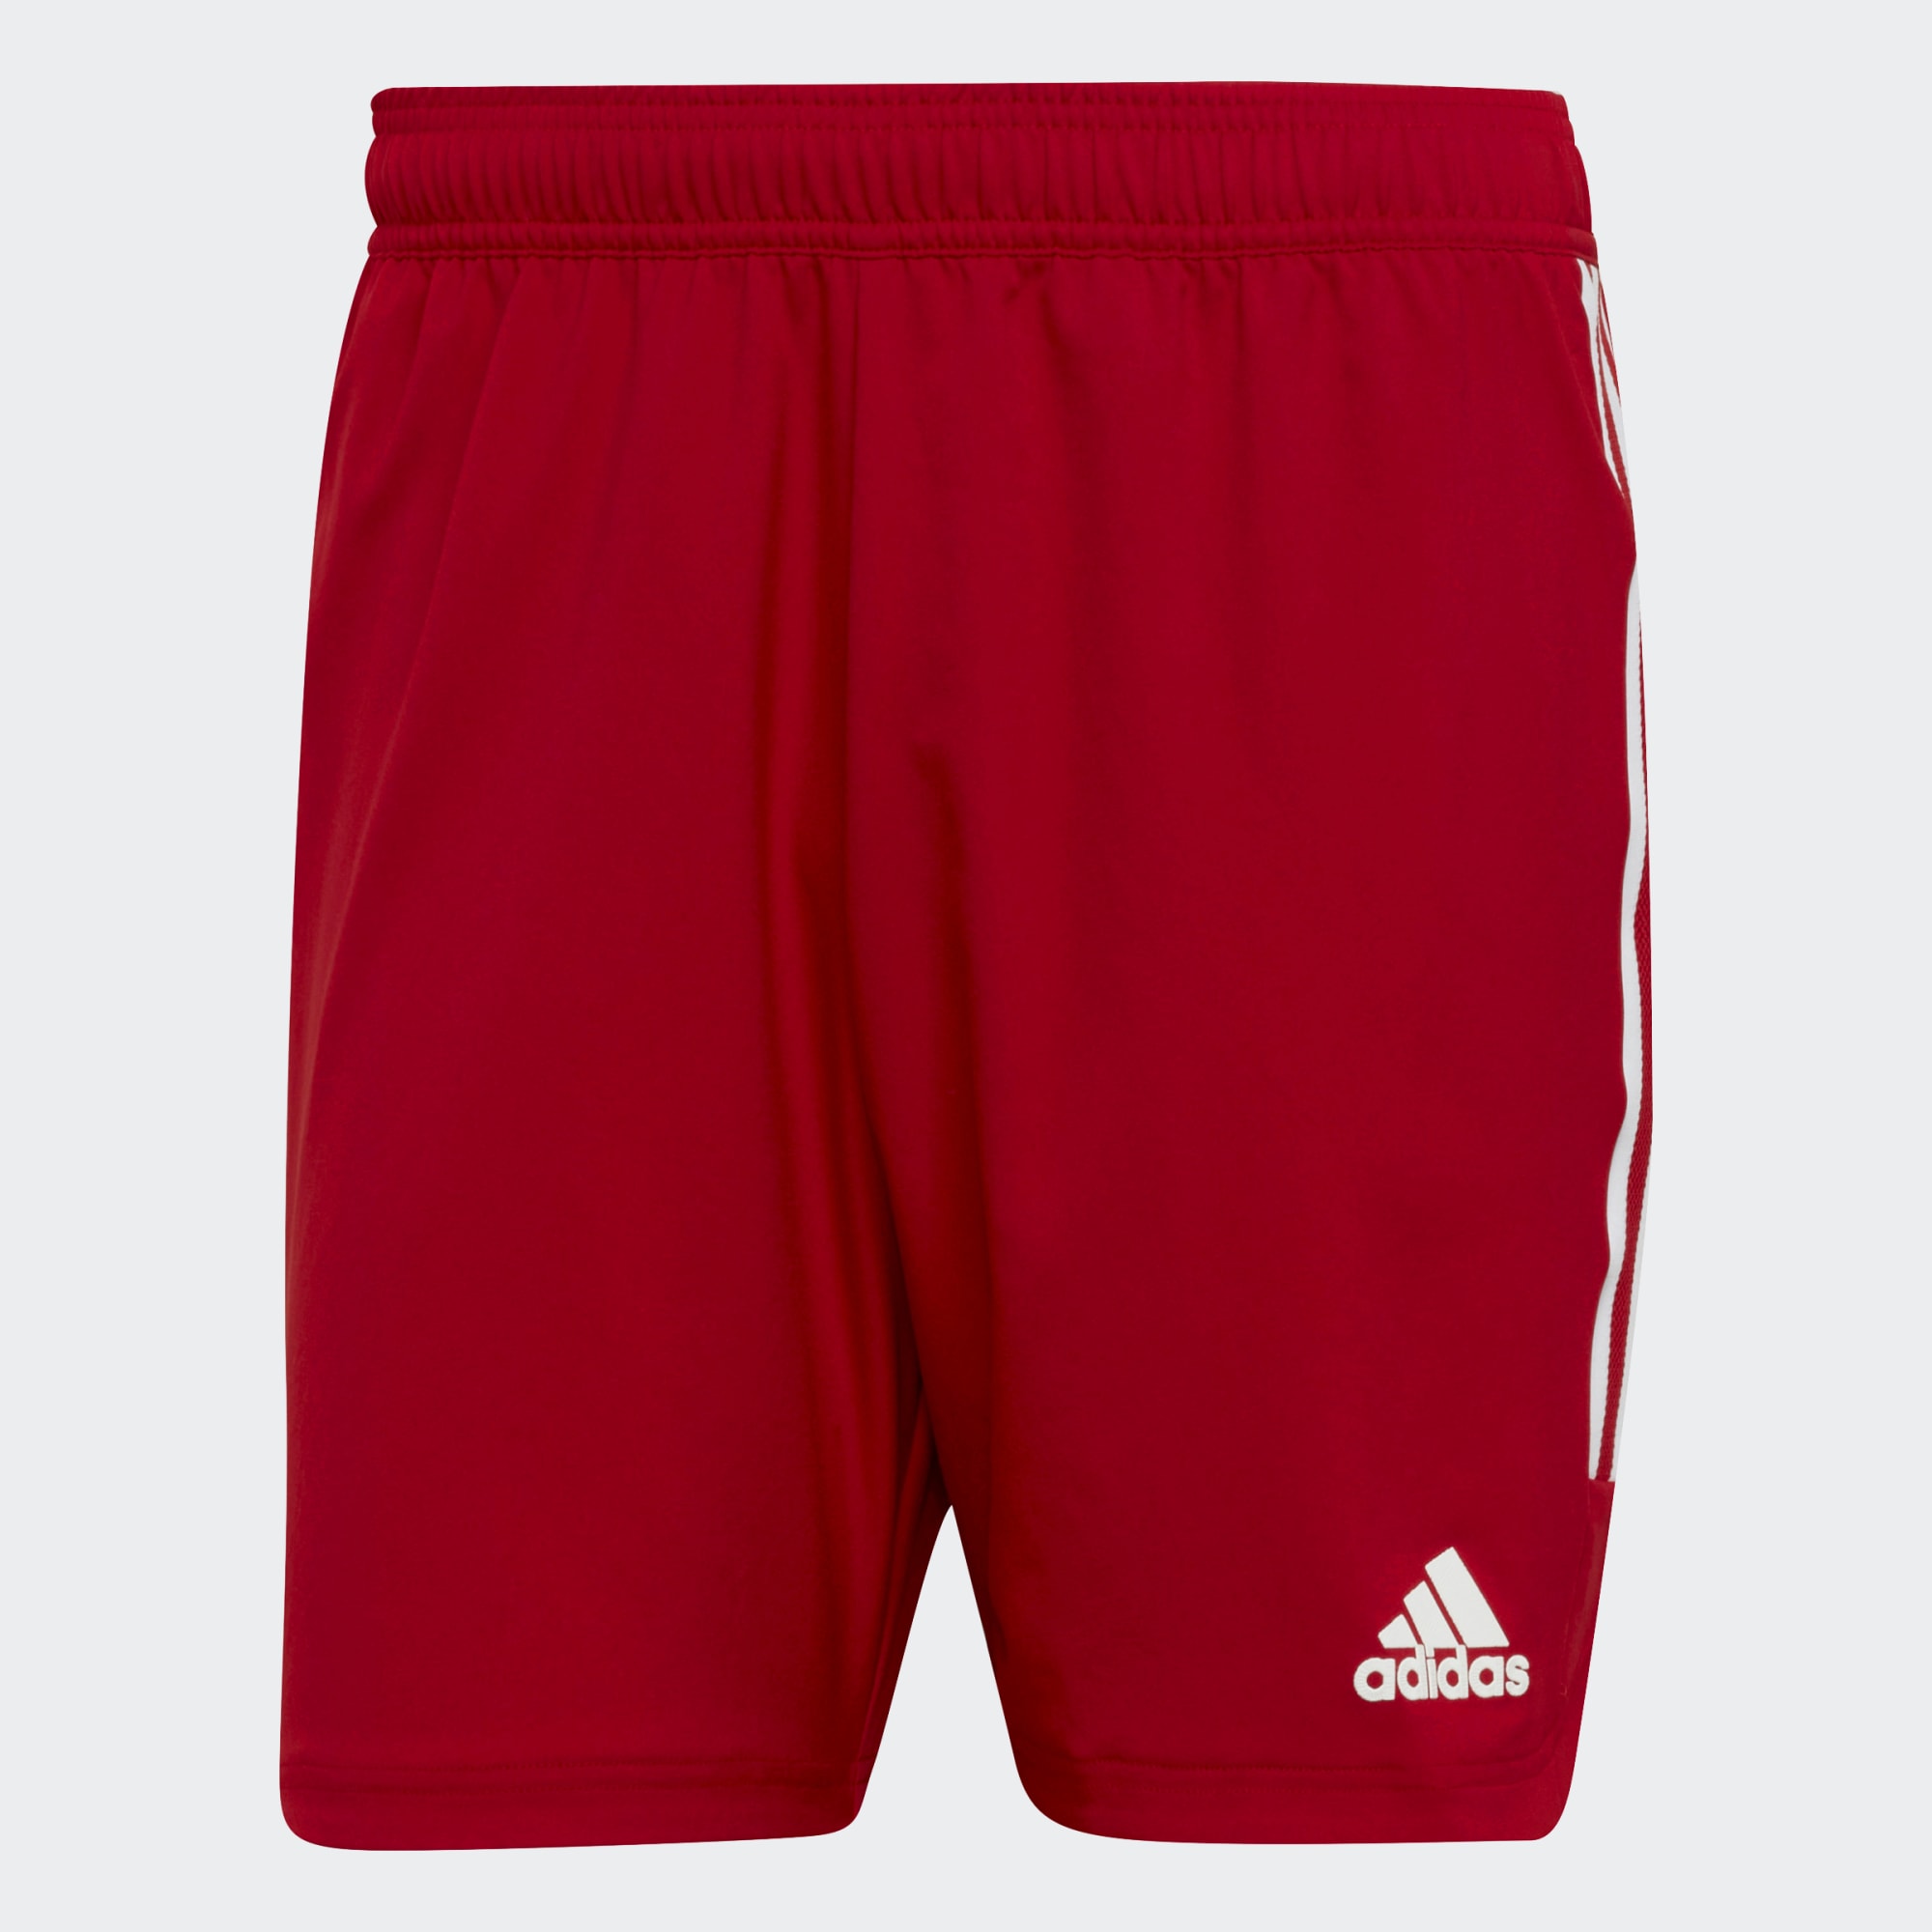 stefanssoccer.com:adidas Condivo 22 Match Soccer Shorts - Power Red 2 / White